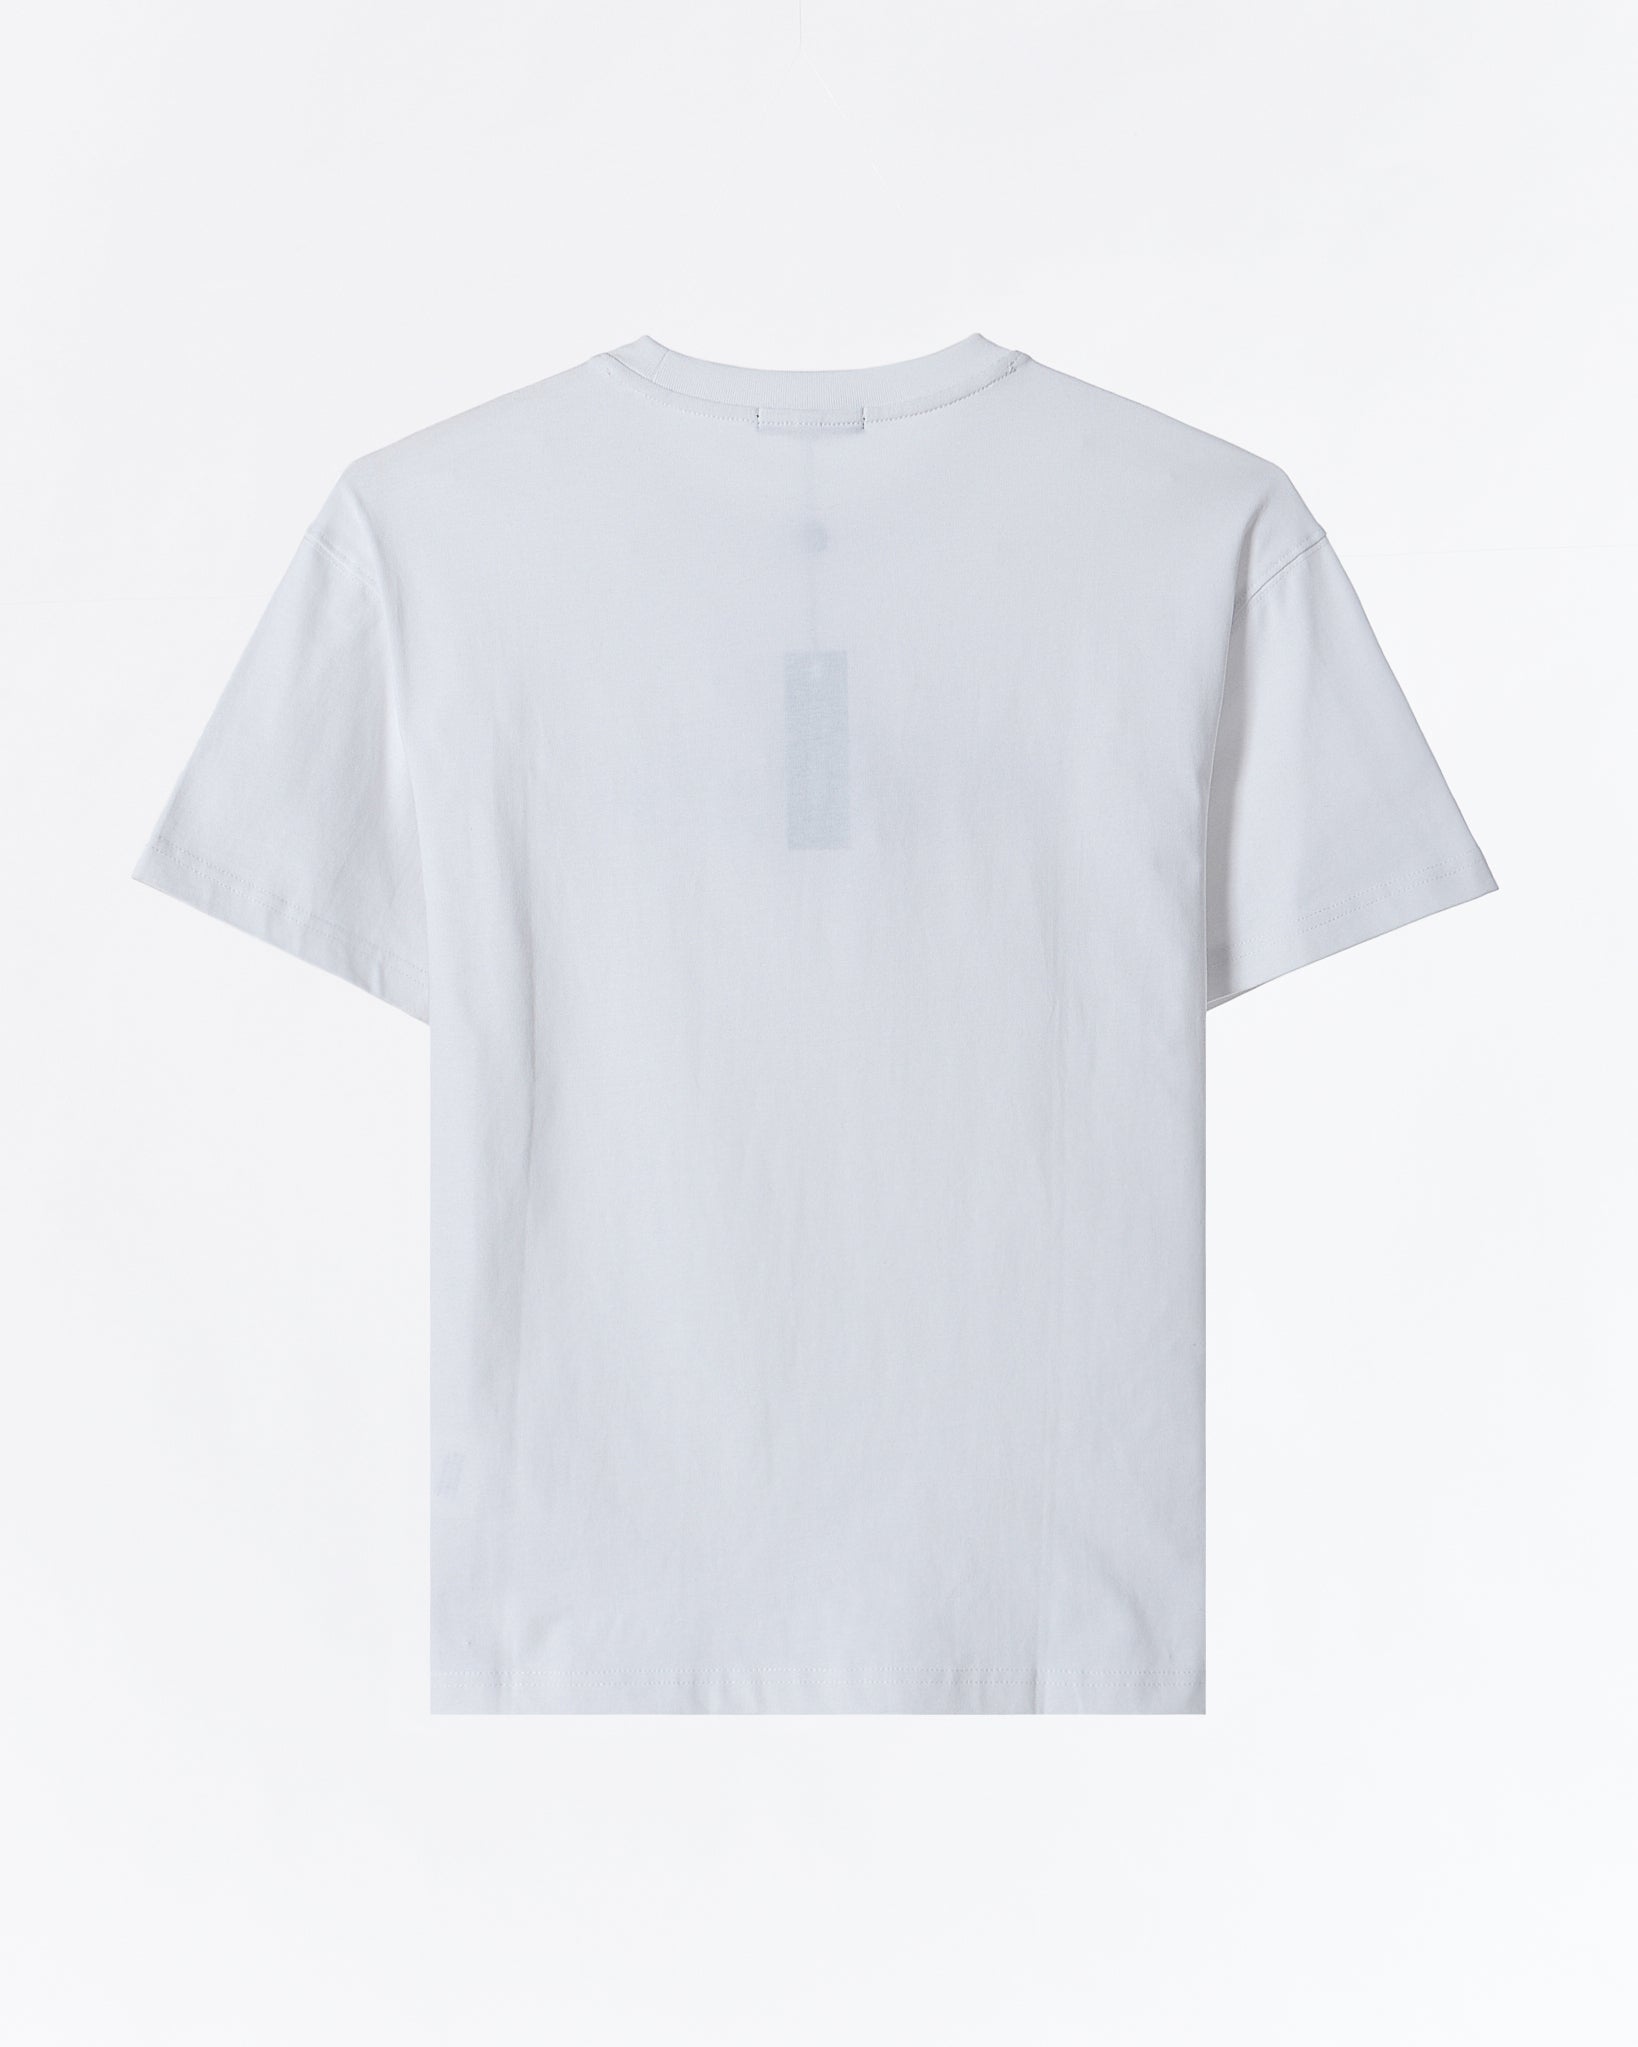 VS Rhinestone Printed Men T-Shirt 54.90